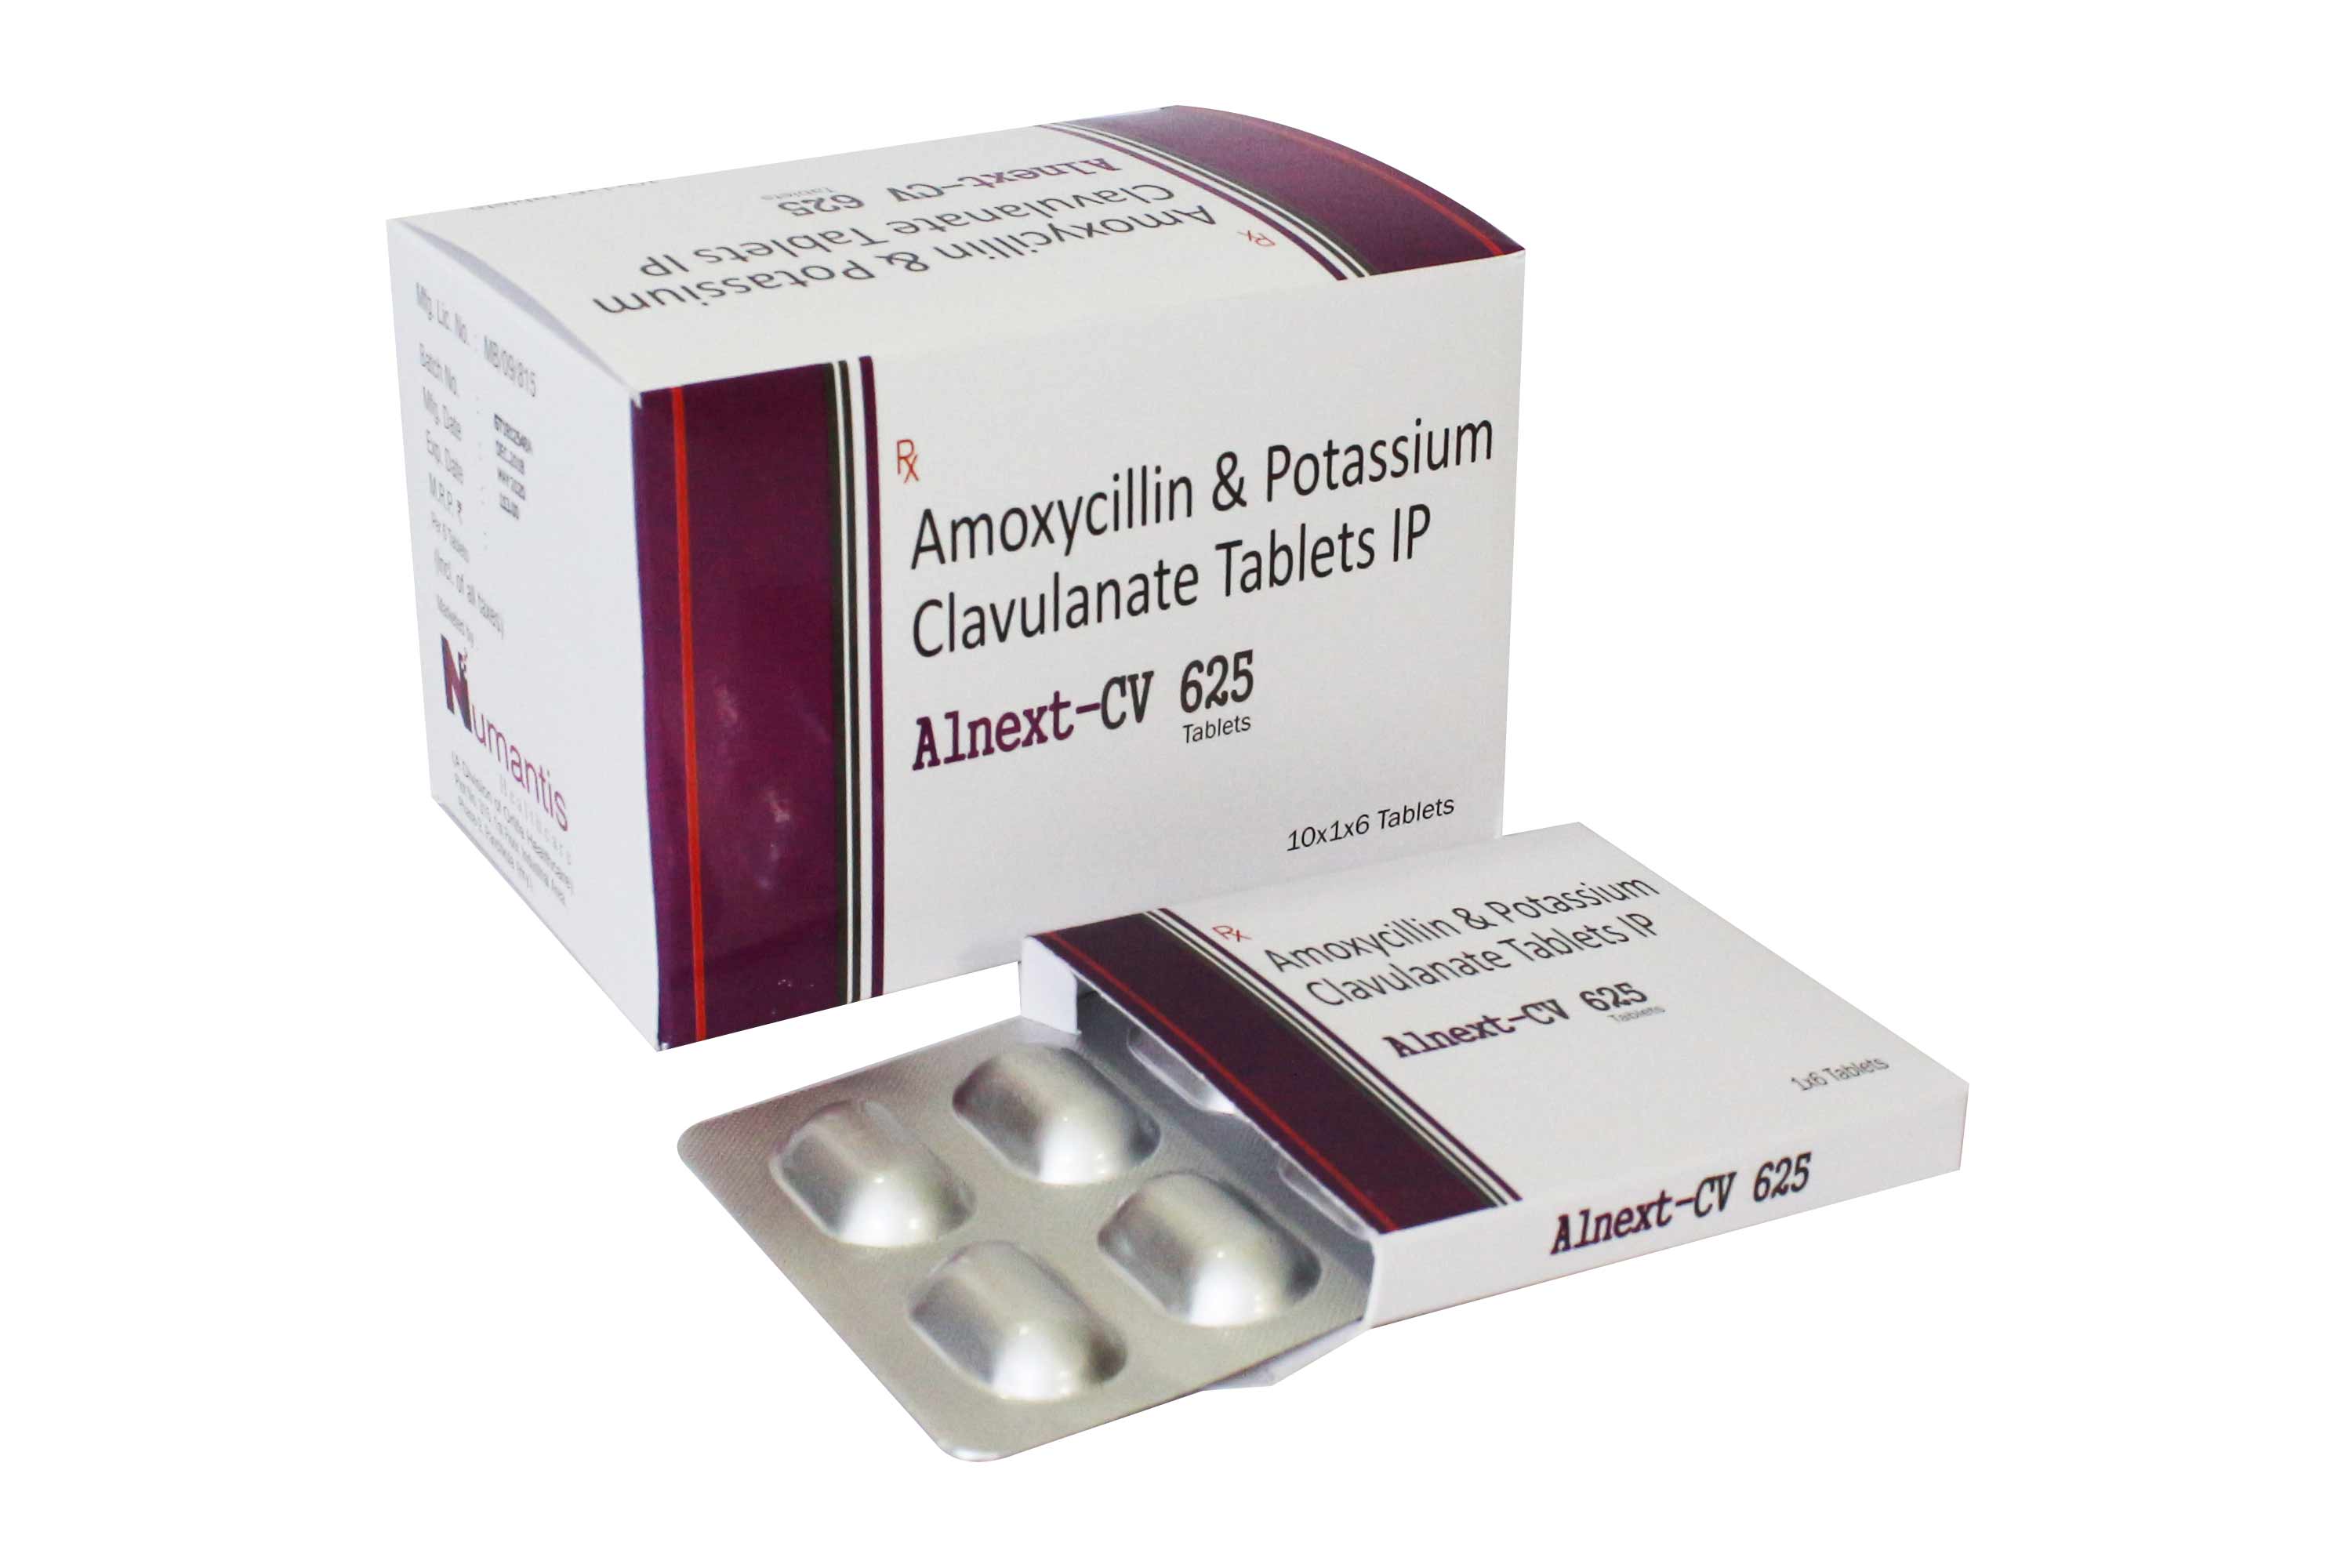 Product Name: Alnext CV, Compositions of Alnext CV are Amoxycillin & Potassium Clavulanate Tablets IP - Numantis Healthcare